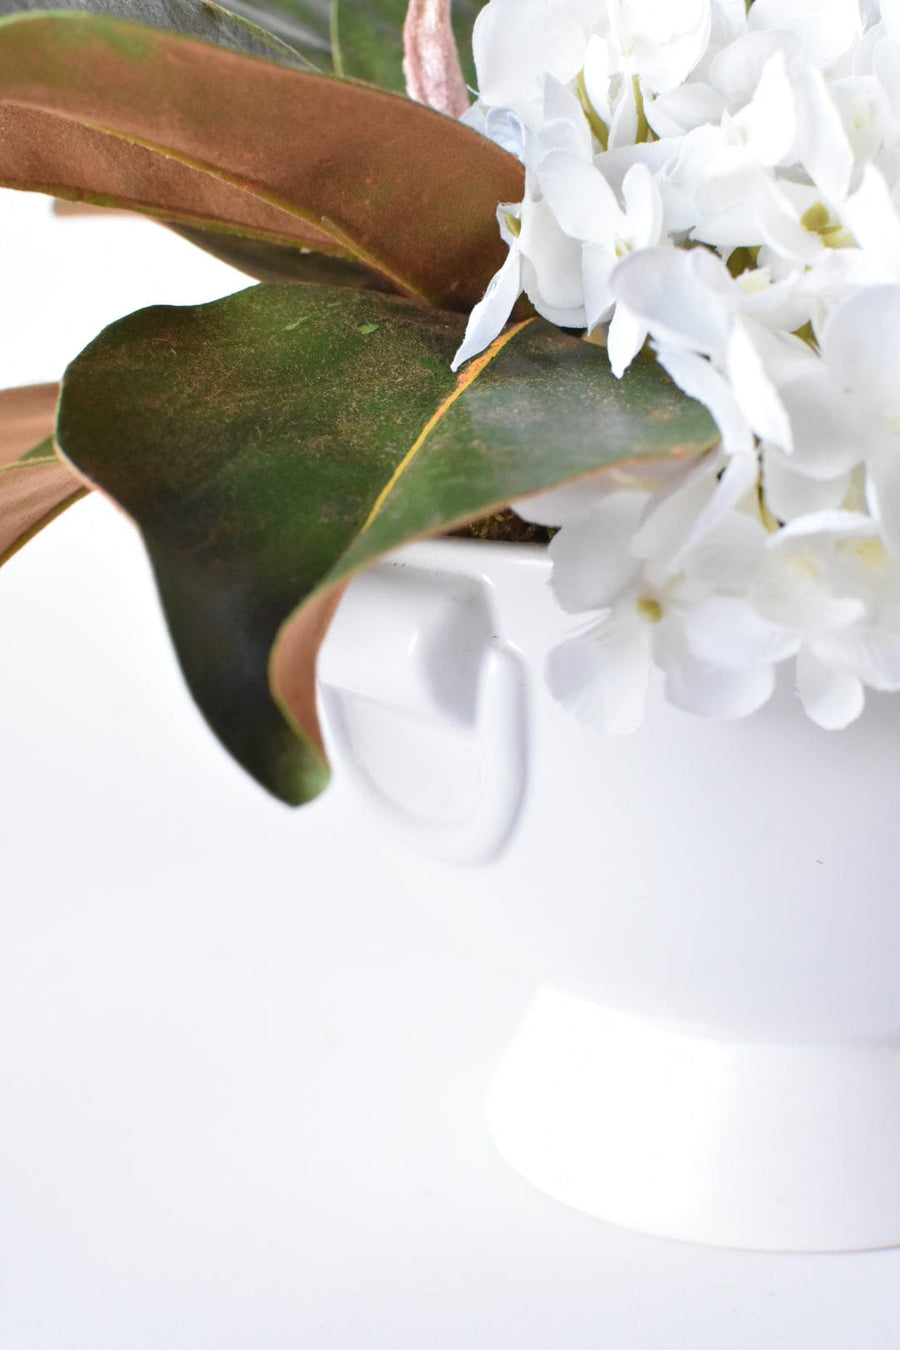 White Hydrangea + Magnolia Leaf Arrangement with Faux Ring Details